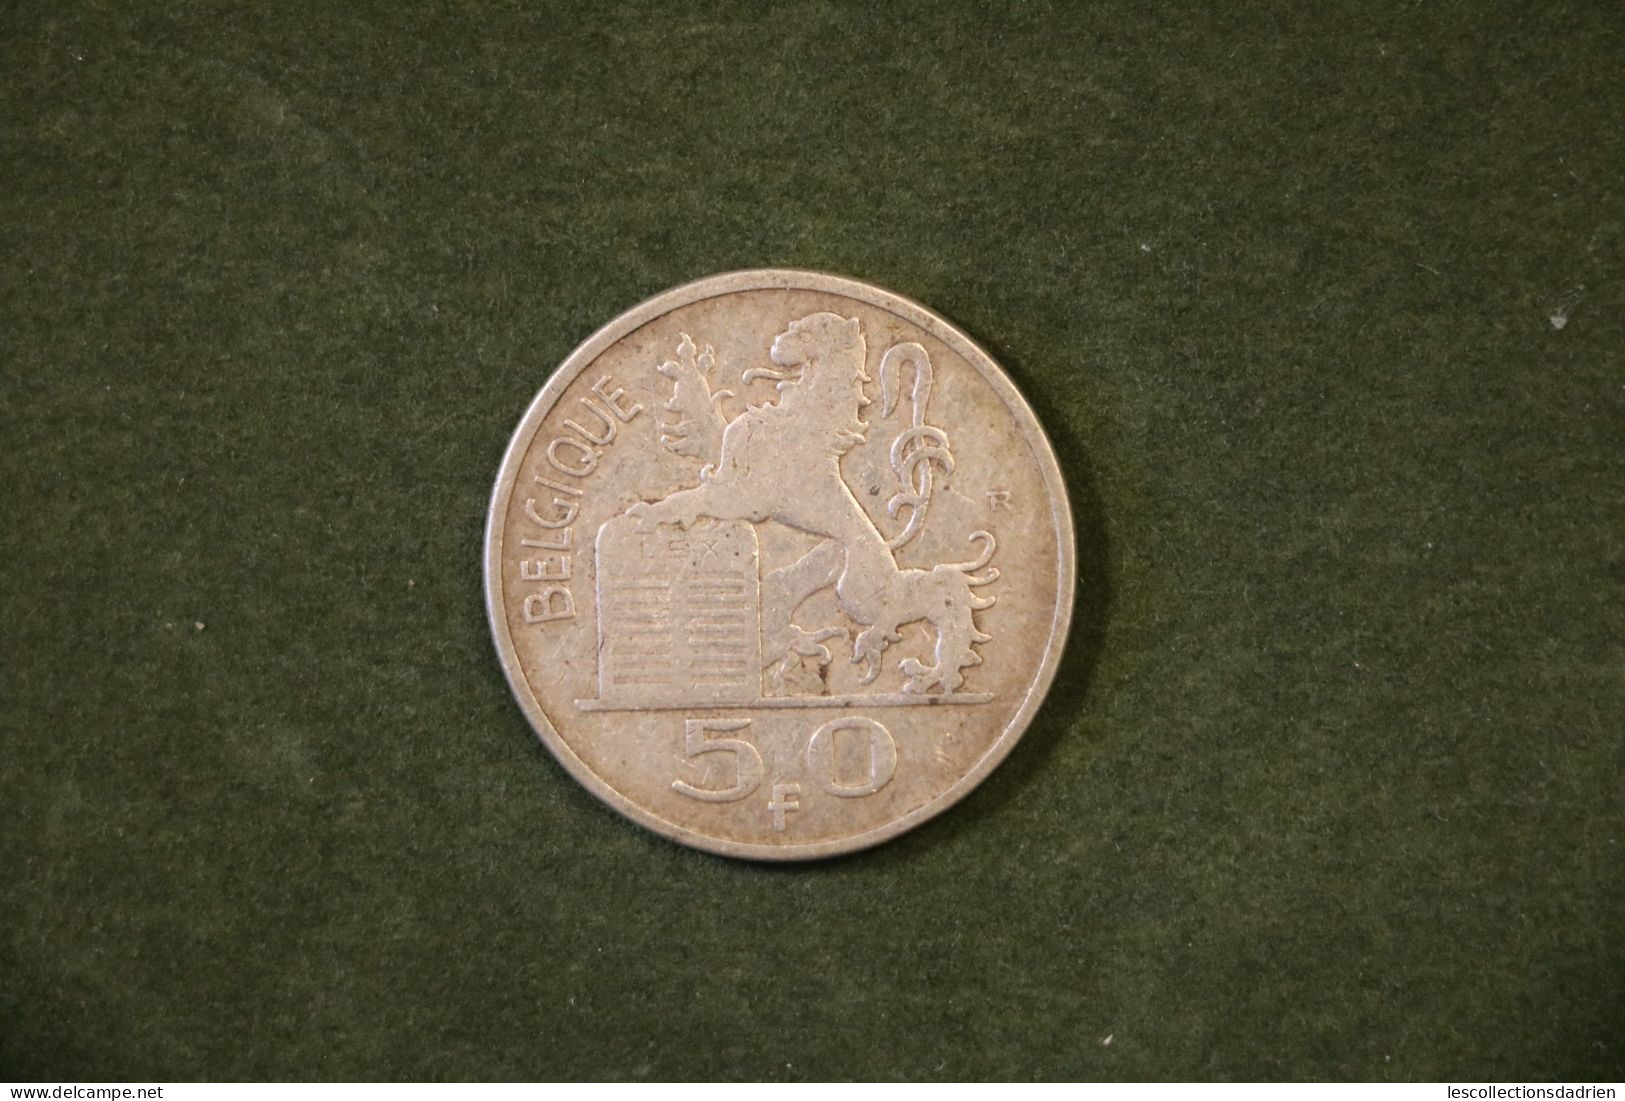 Pièce En Argent Belgique 50 Francs 1951 FR -  Belgian Silver Coin - 50 Francs